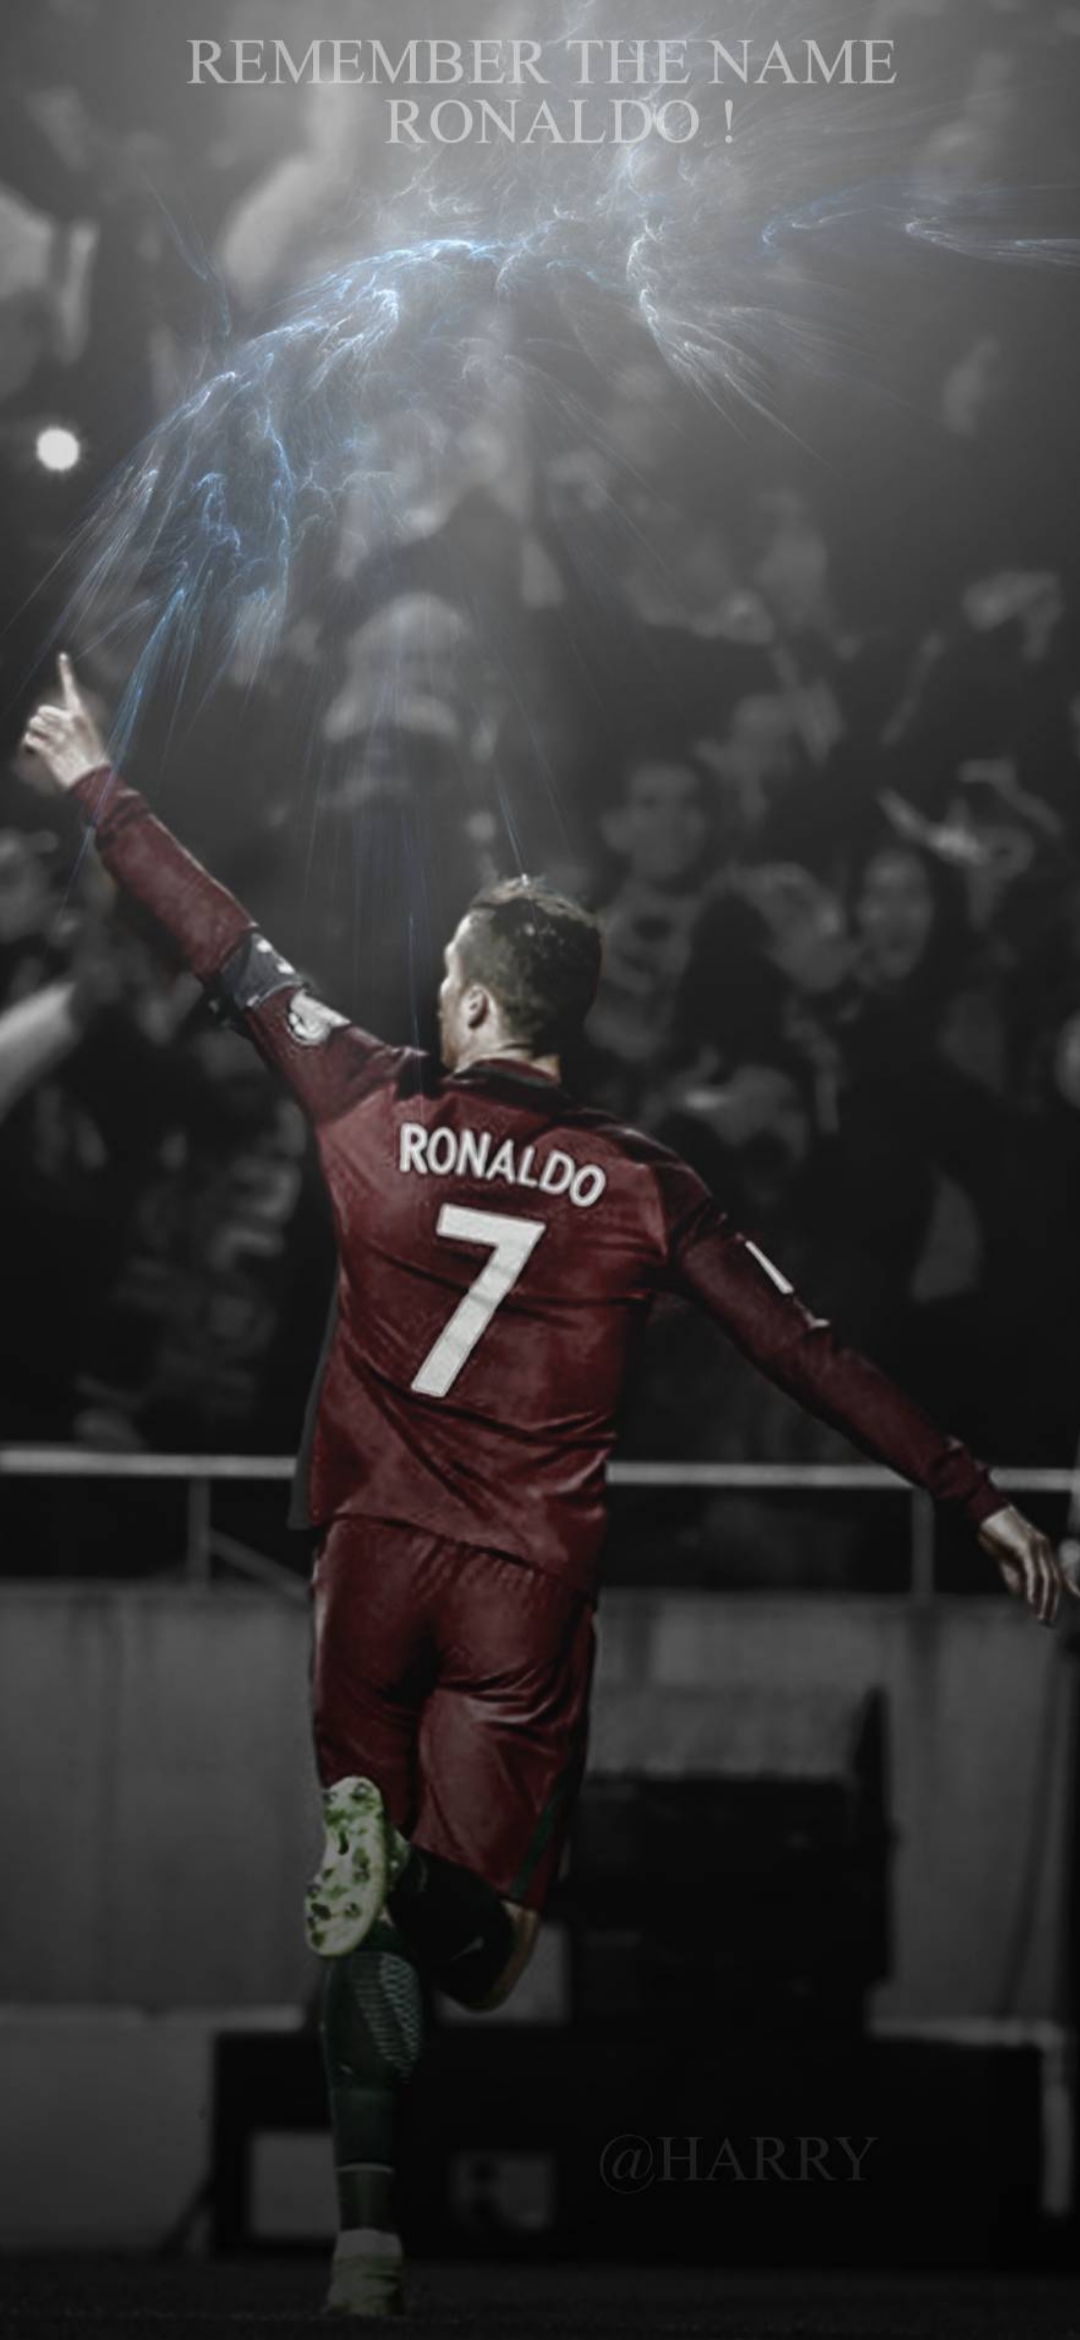 Ronaldo Wallpapers - Top 78 Best Cristiano Ronaldo Wallpapers [ HQ ]